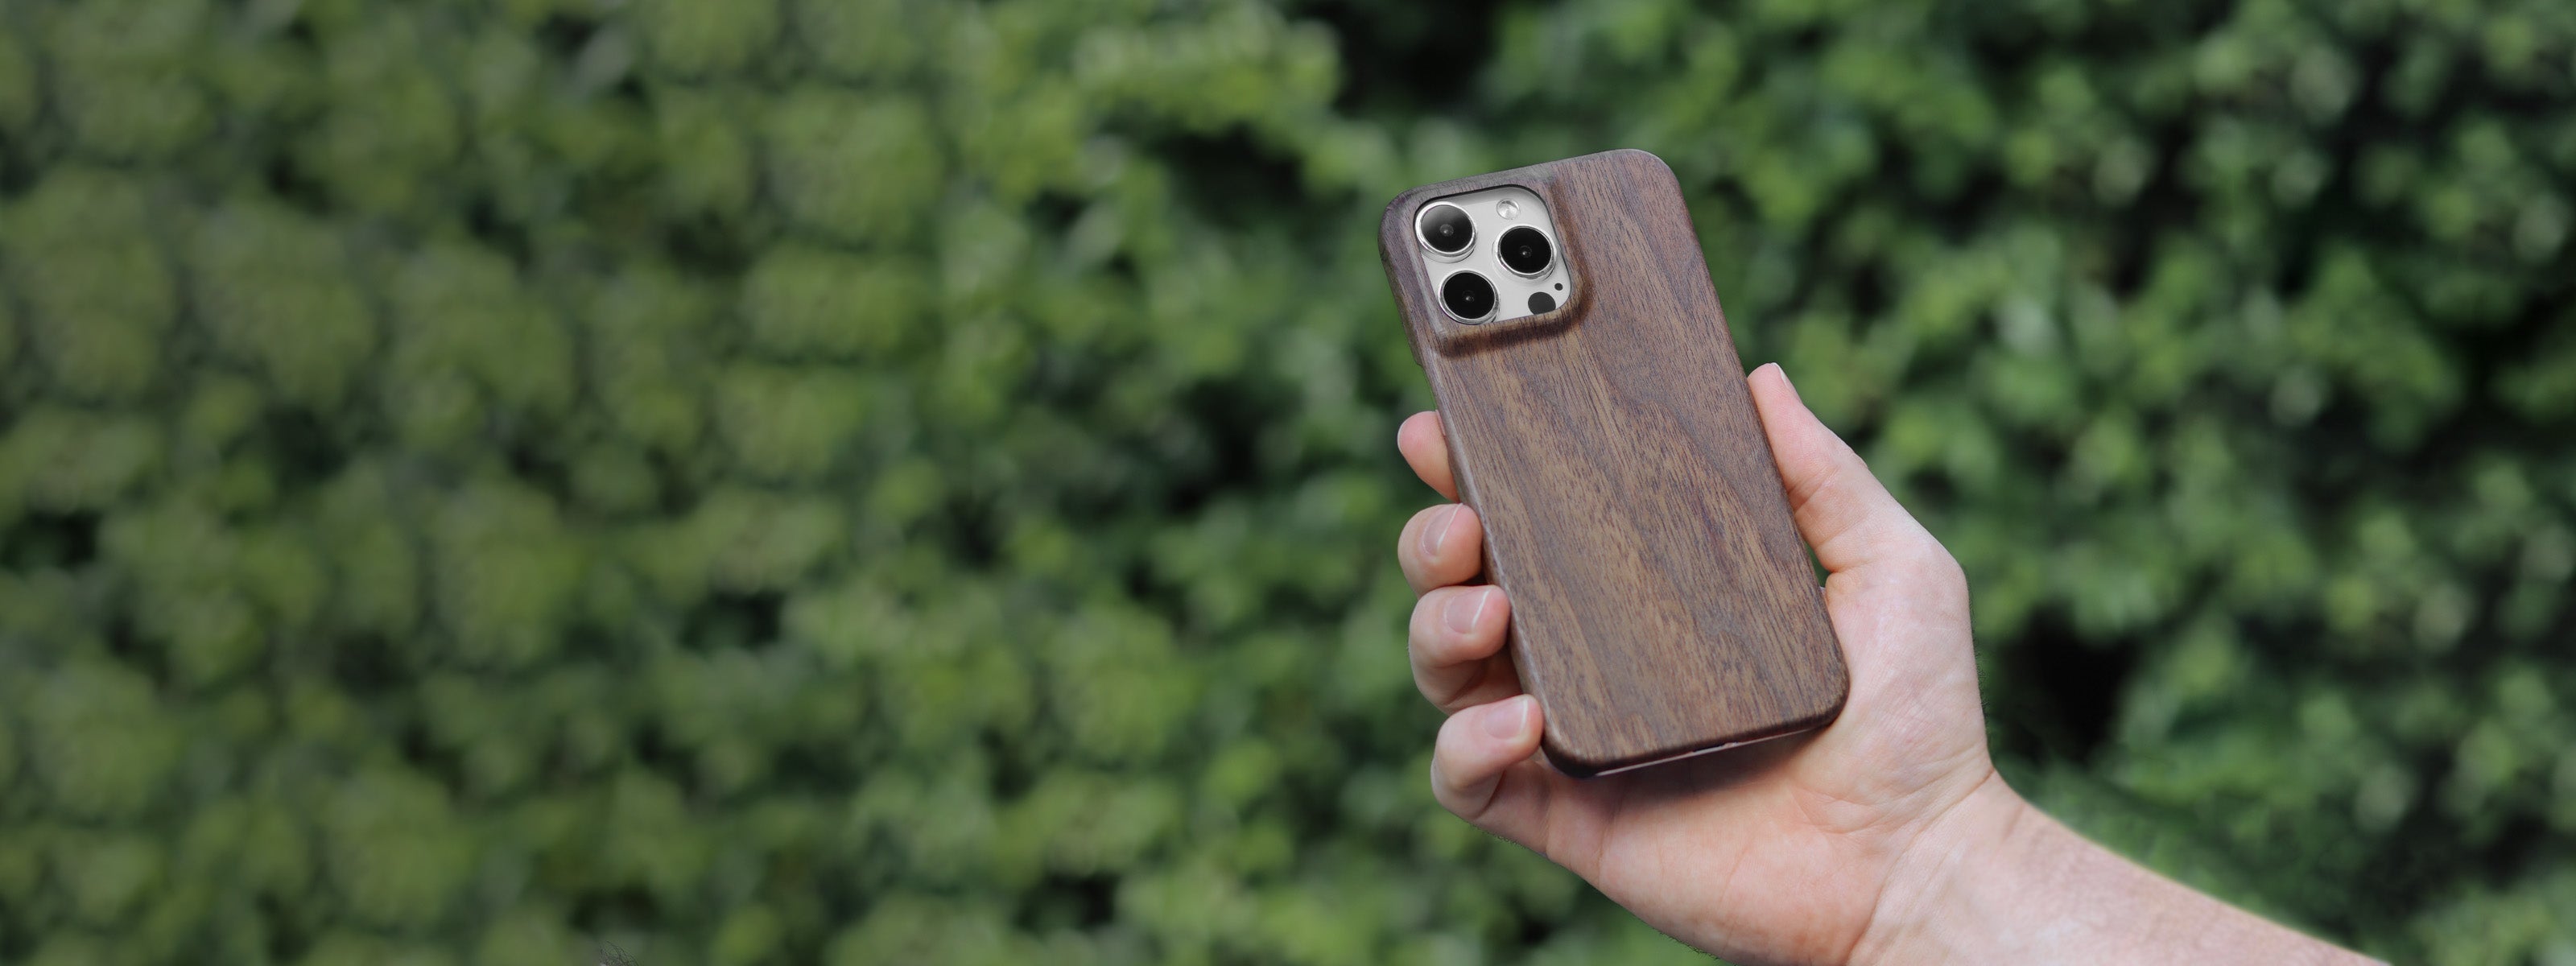 Toast Wood Cover for iPhone 13, 13 mini, 13 Pro, 13 Pro Max, Toast